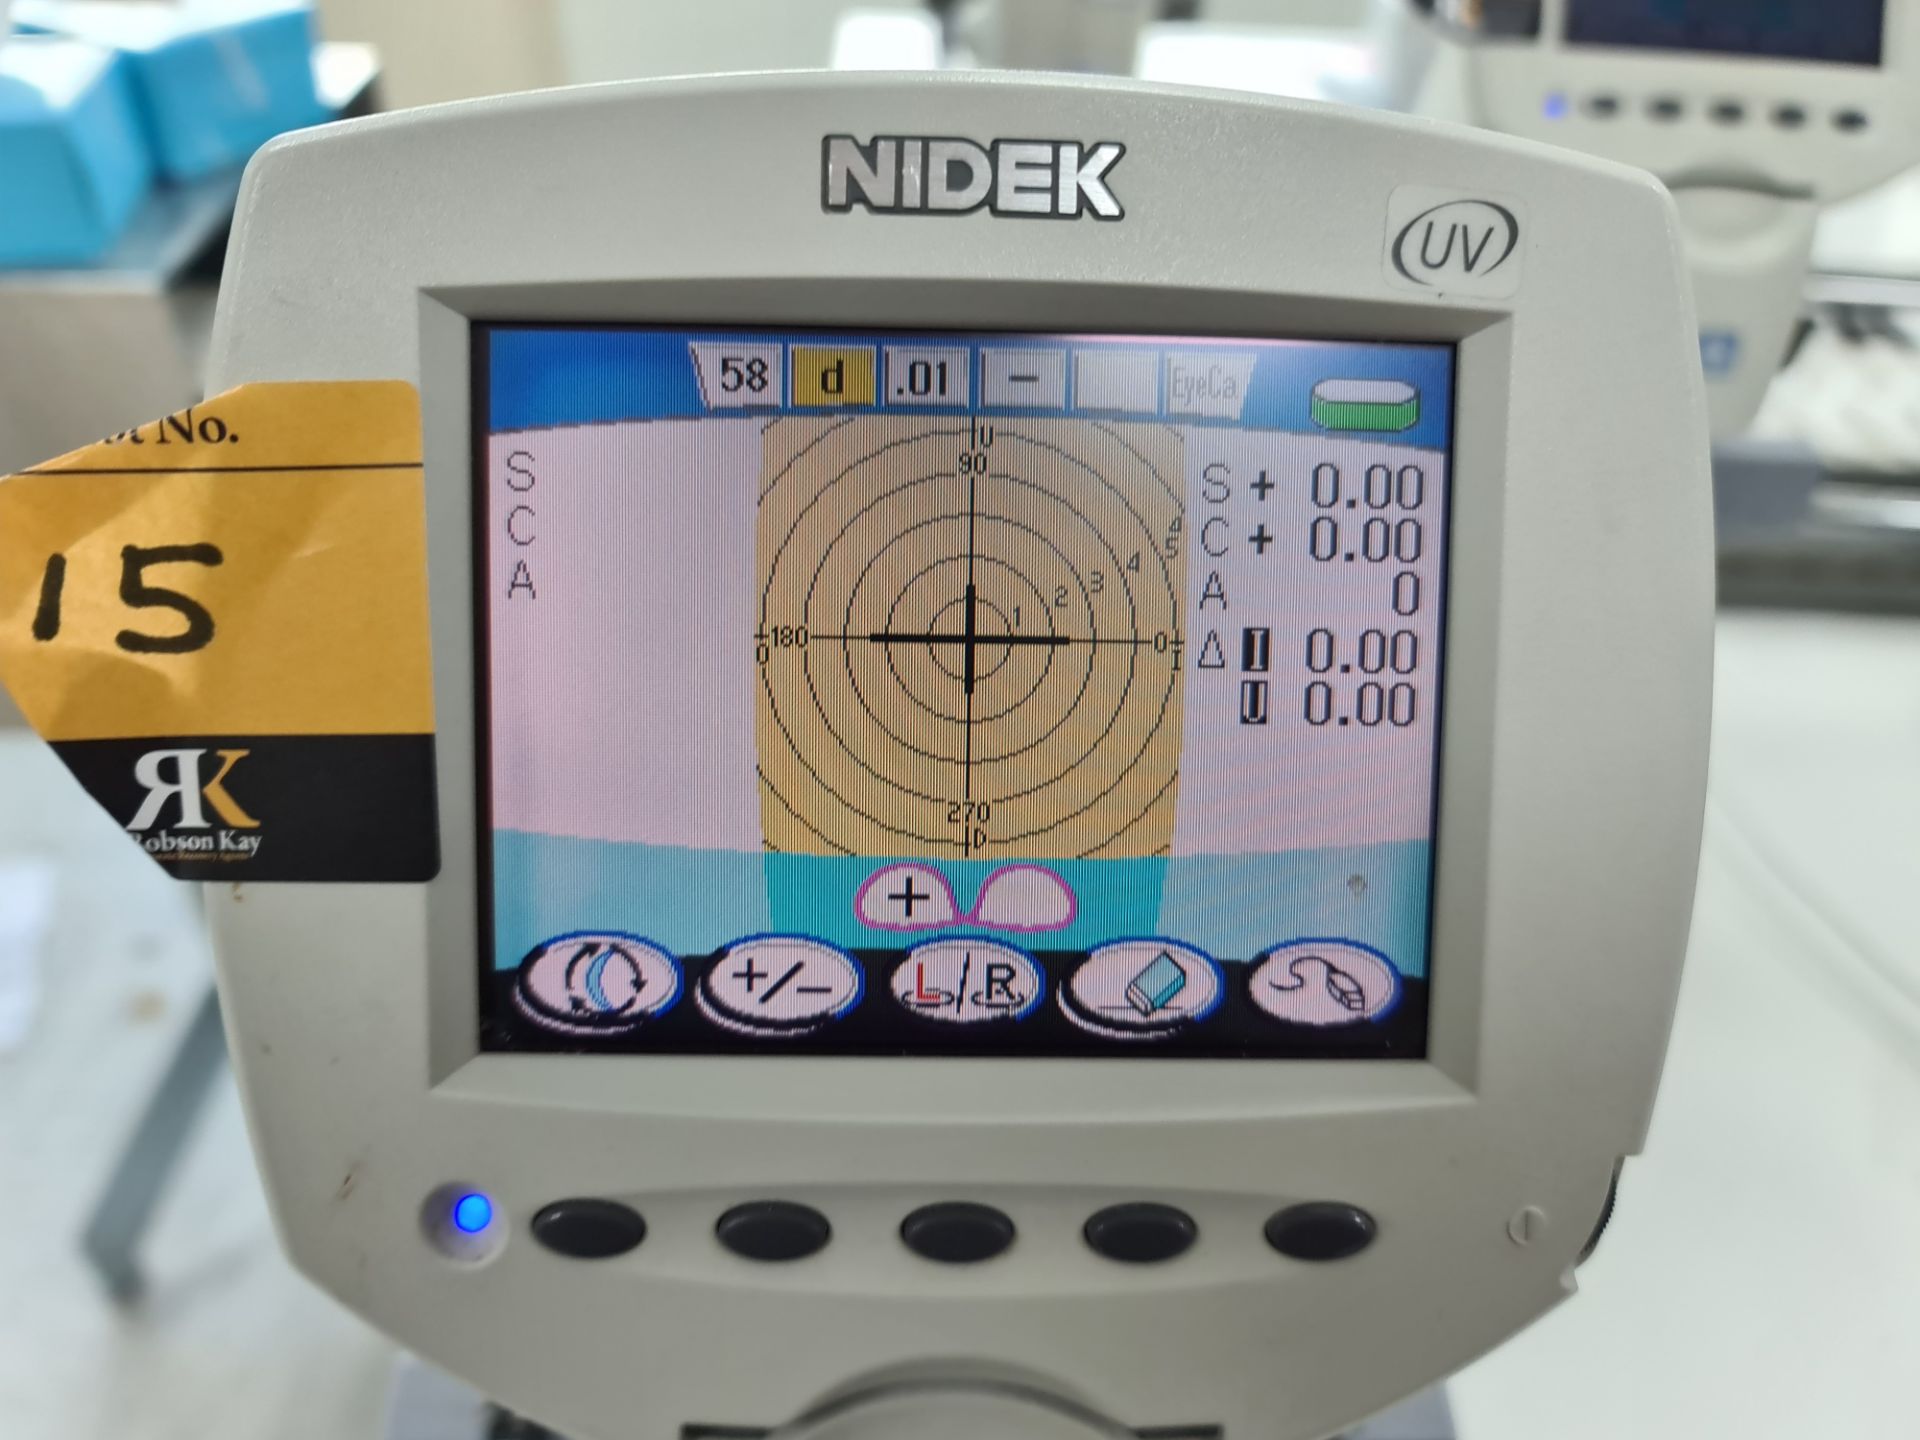 Nidek Auto Lensmeter model LM-600PD - Image 9 of 10